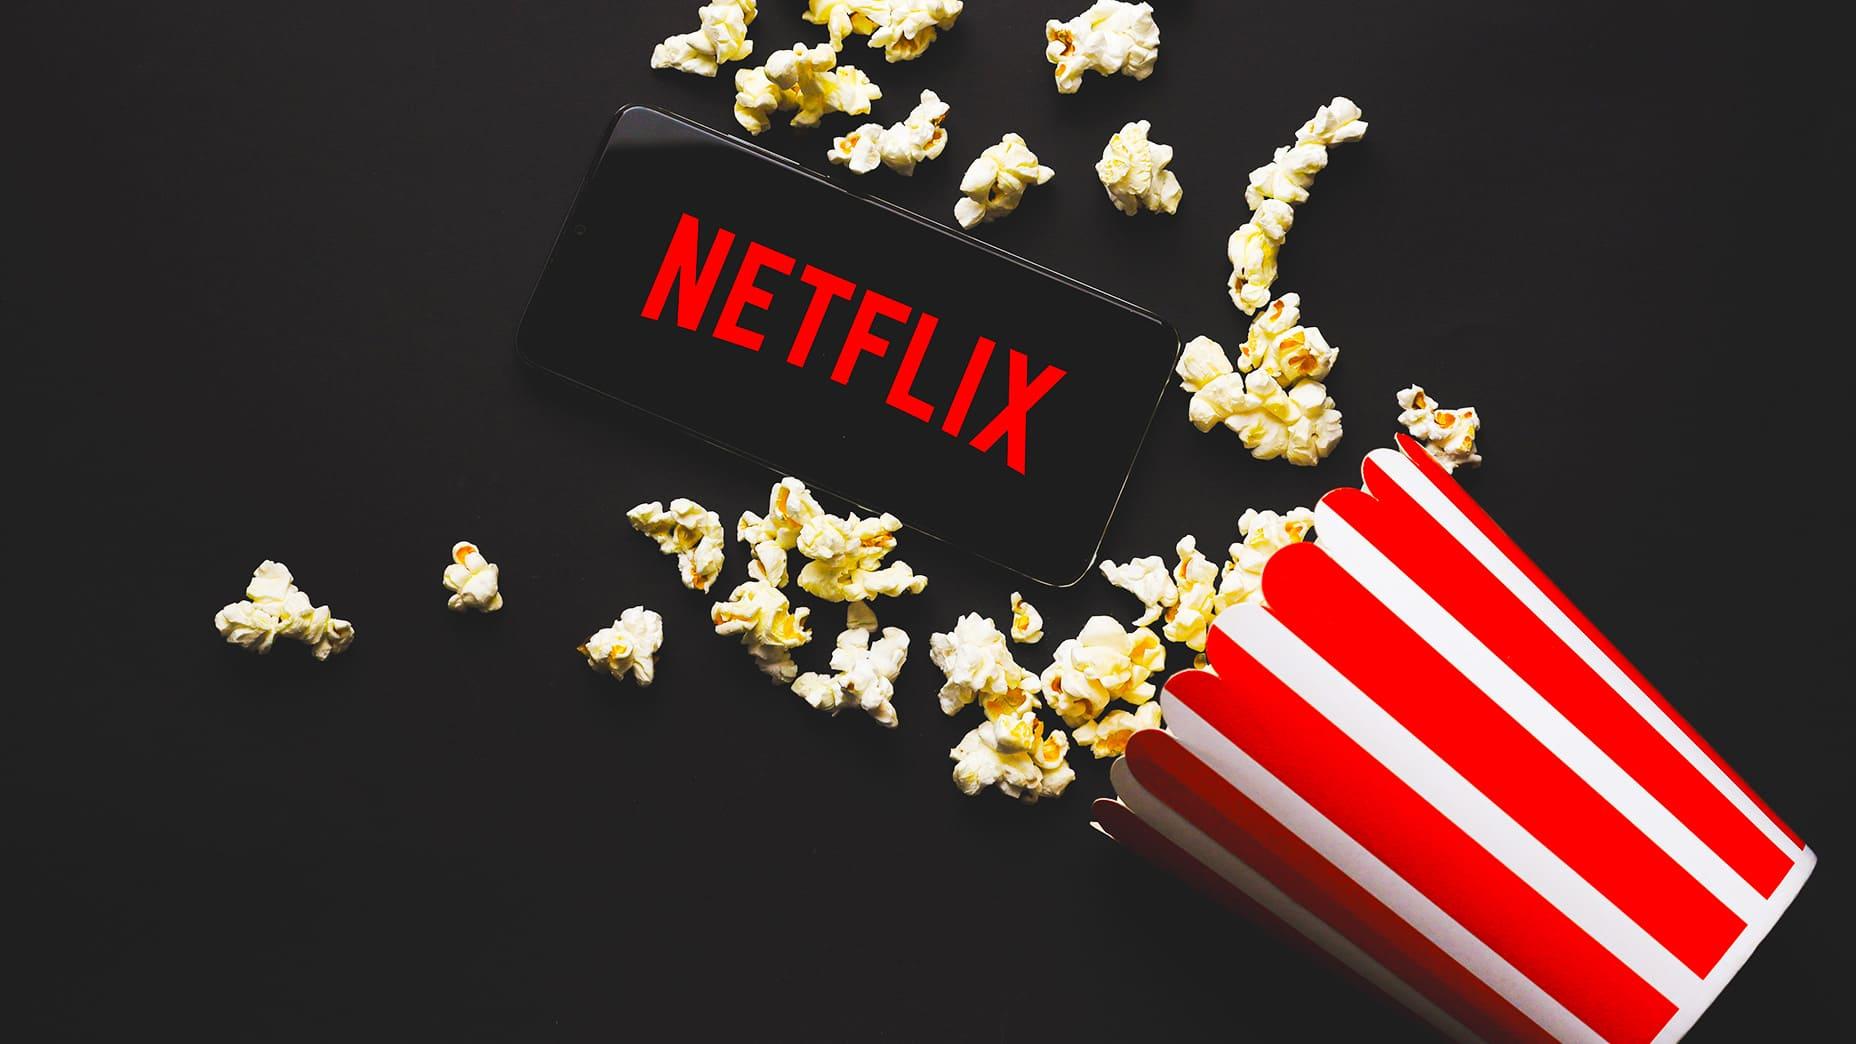 Análisis bursátil de Netflix: crecimiento de audiencia e ingresos récord